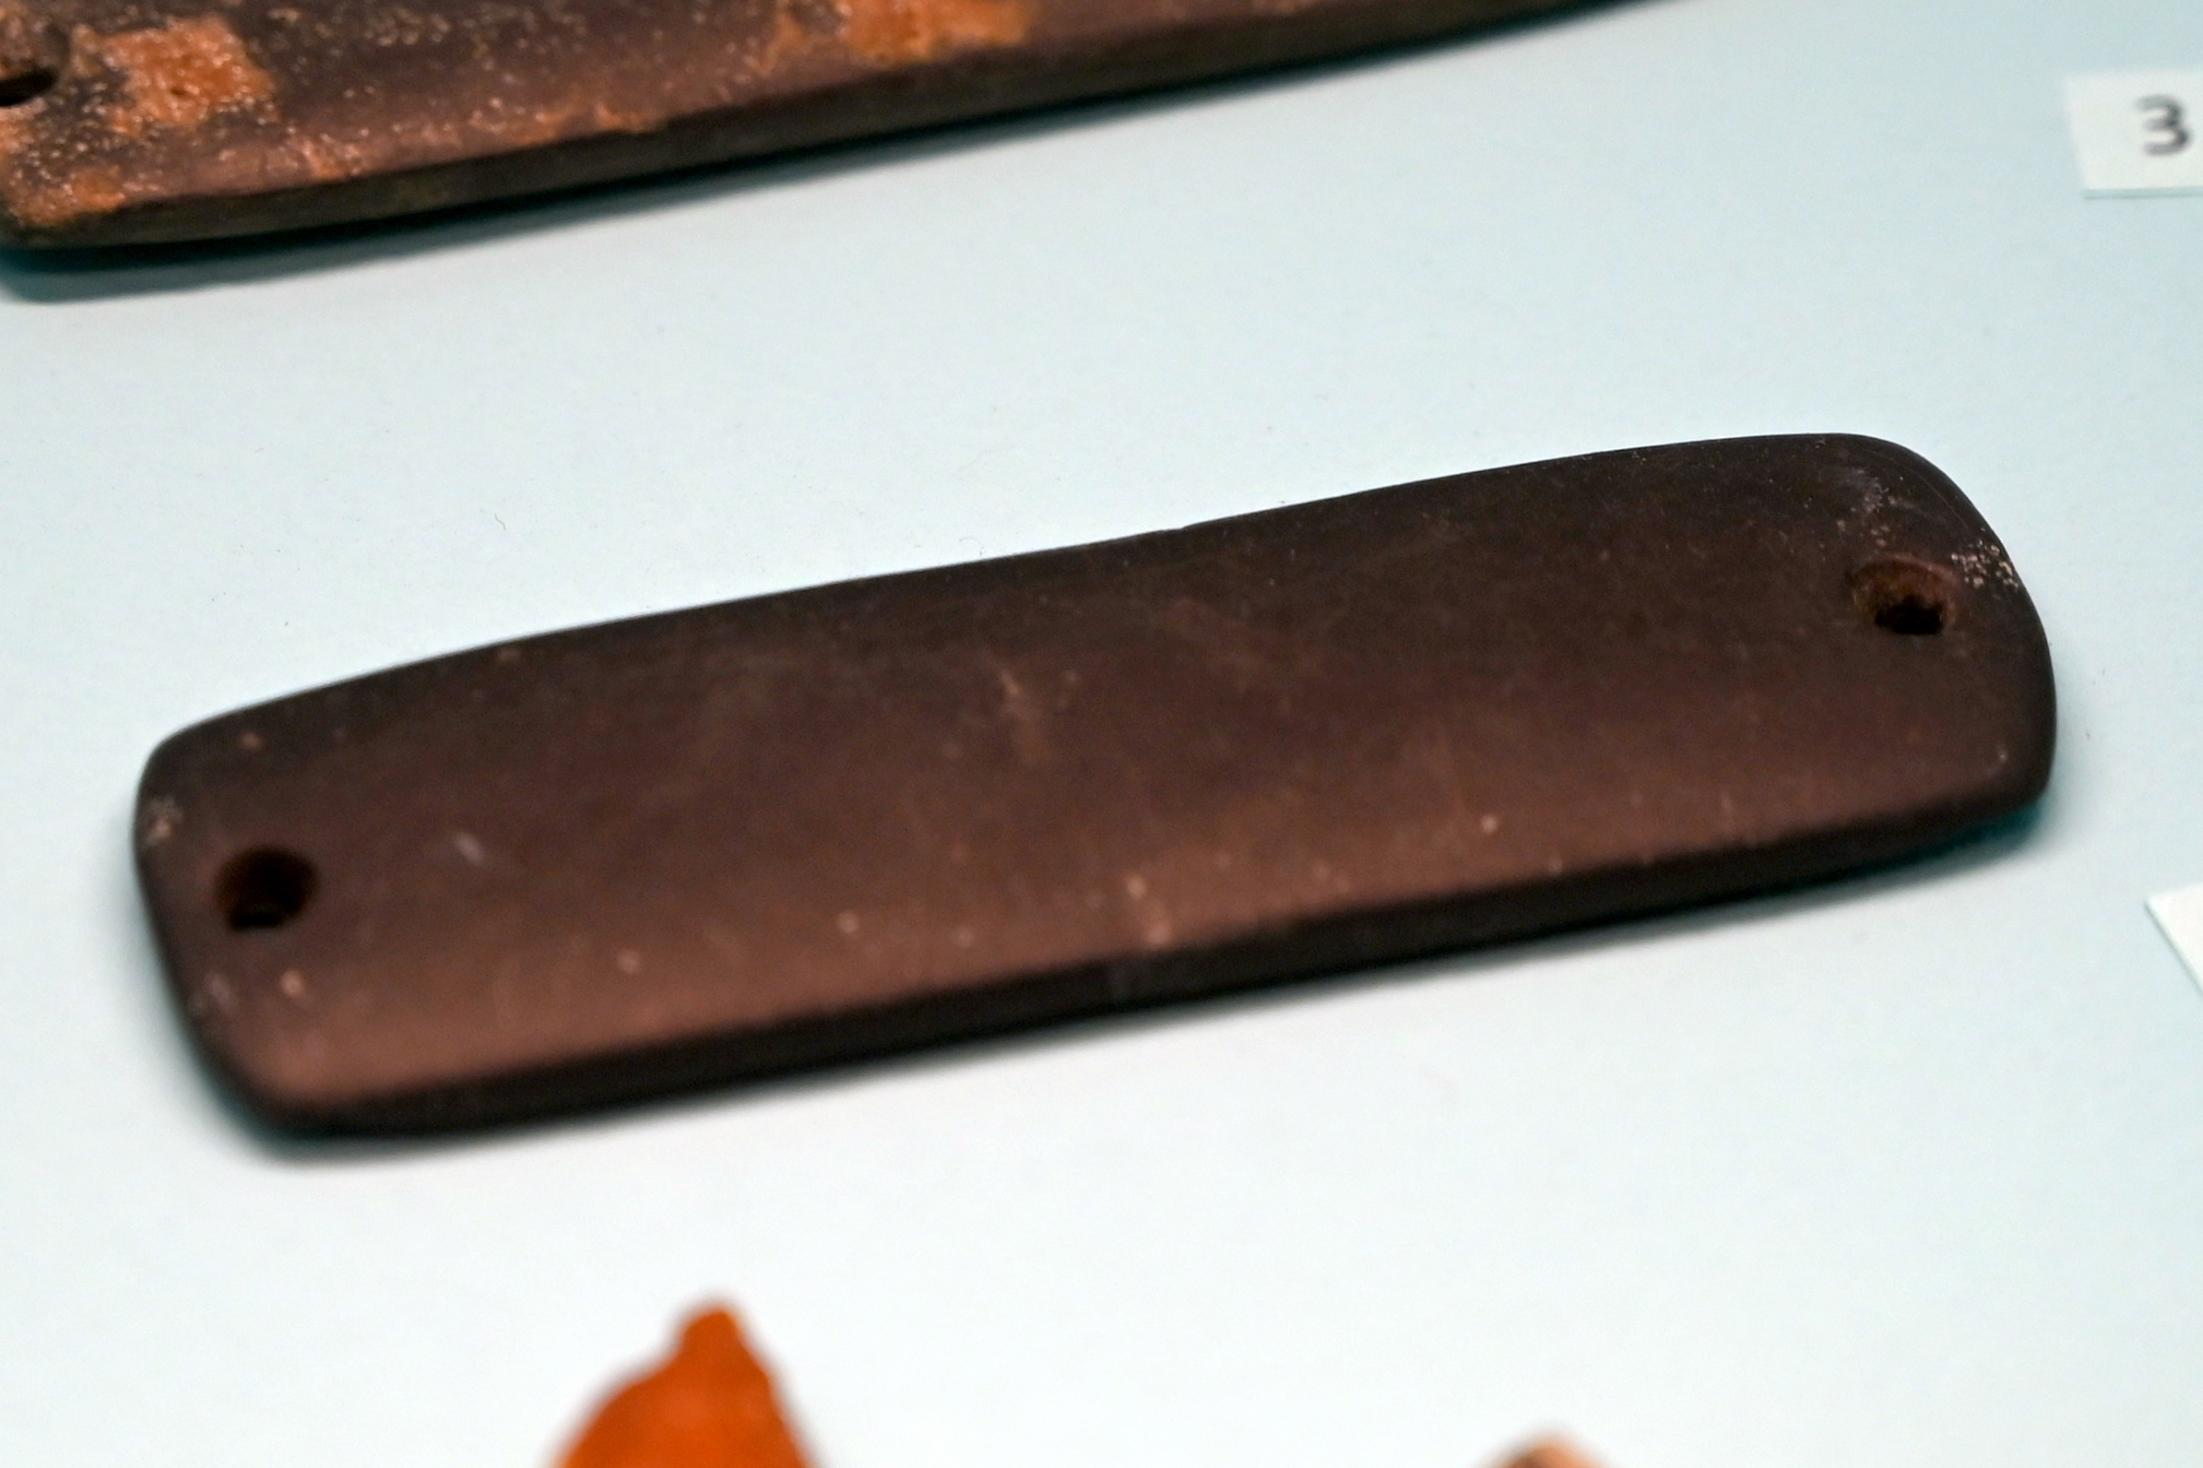 Armschutzplatte, Endneolithikum, 2800 - 1700 v. Chr., 2800 - 2150 v. Chr., Bild 1/2